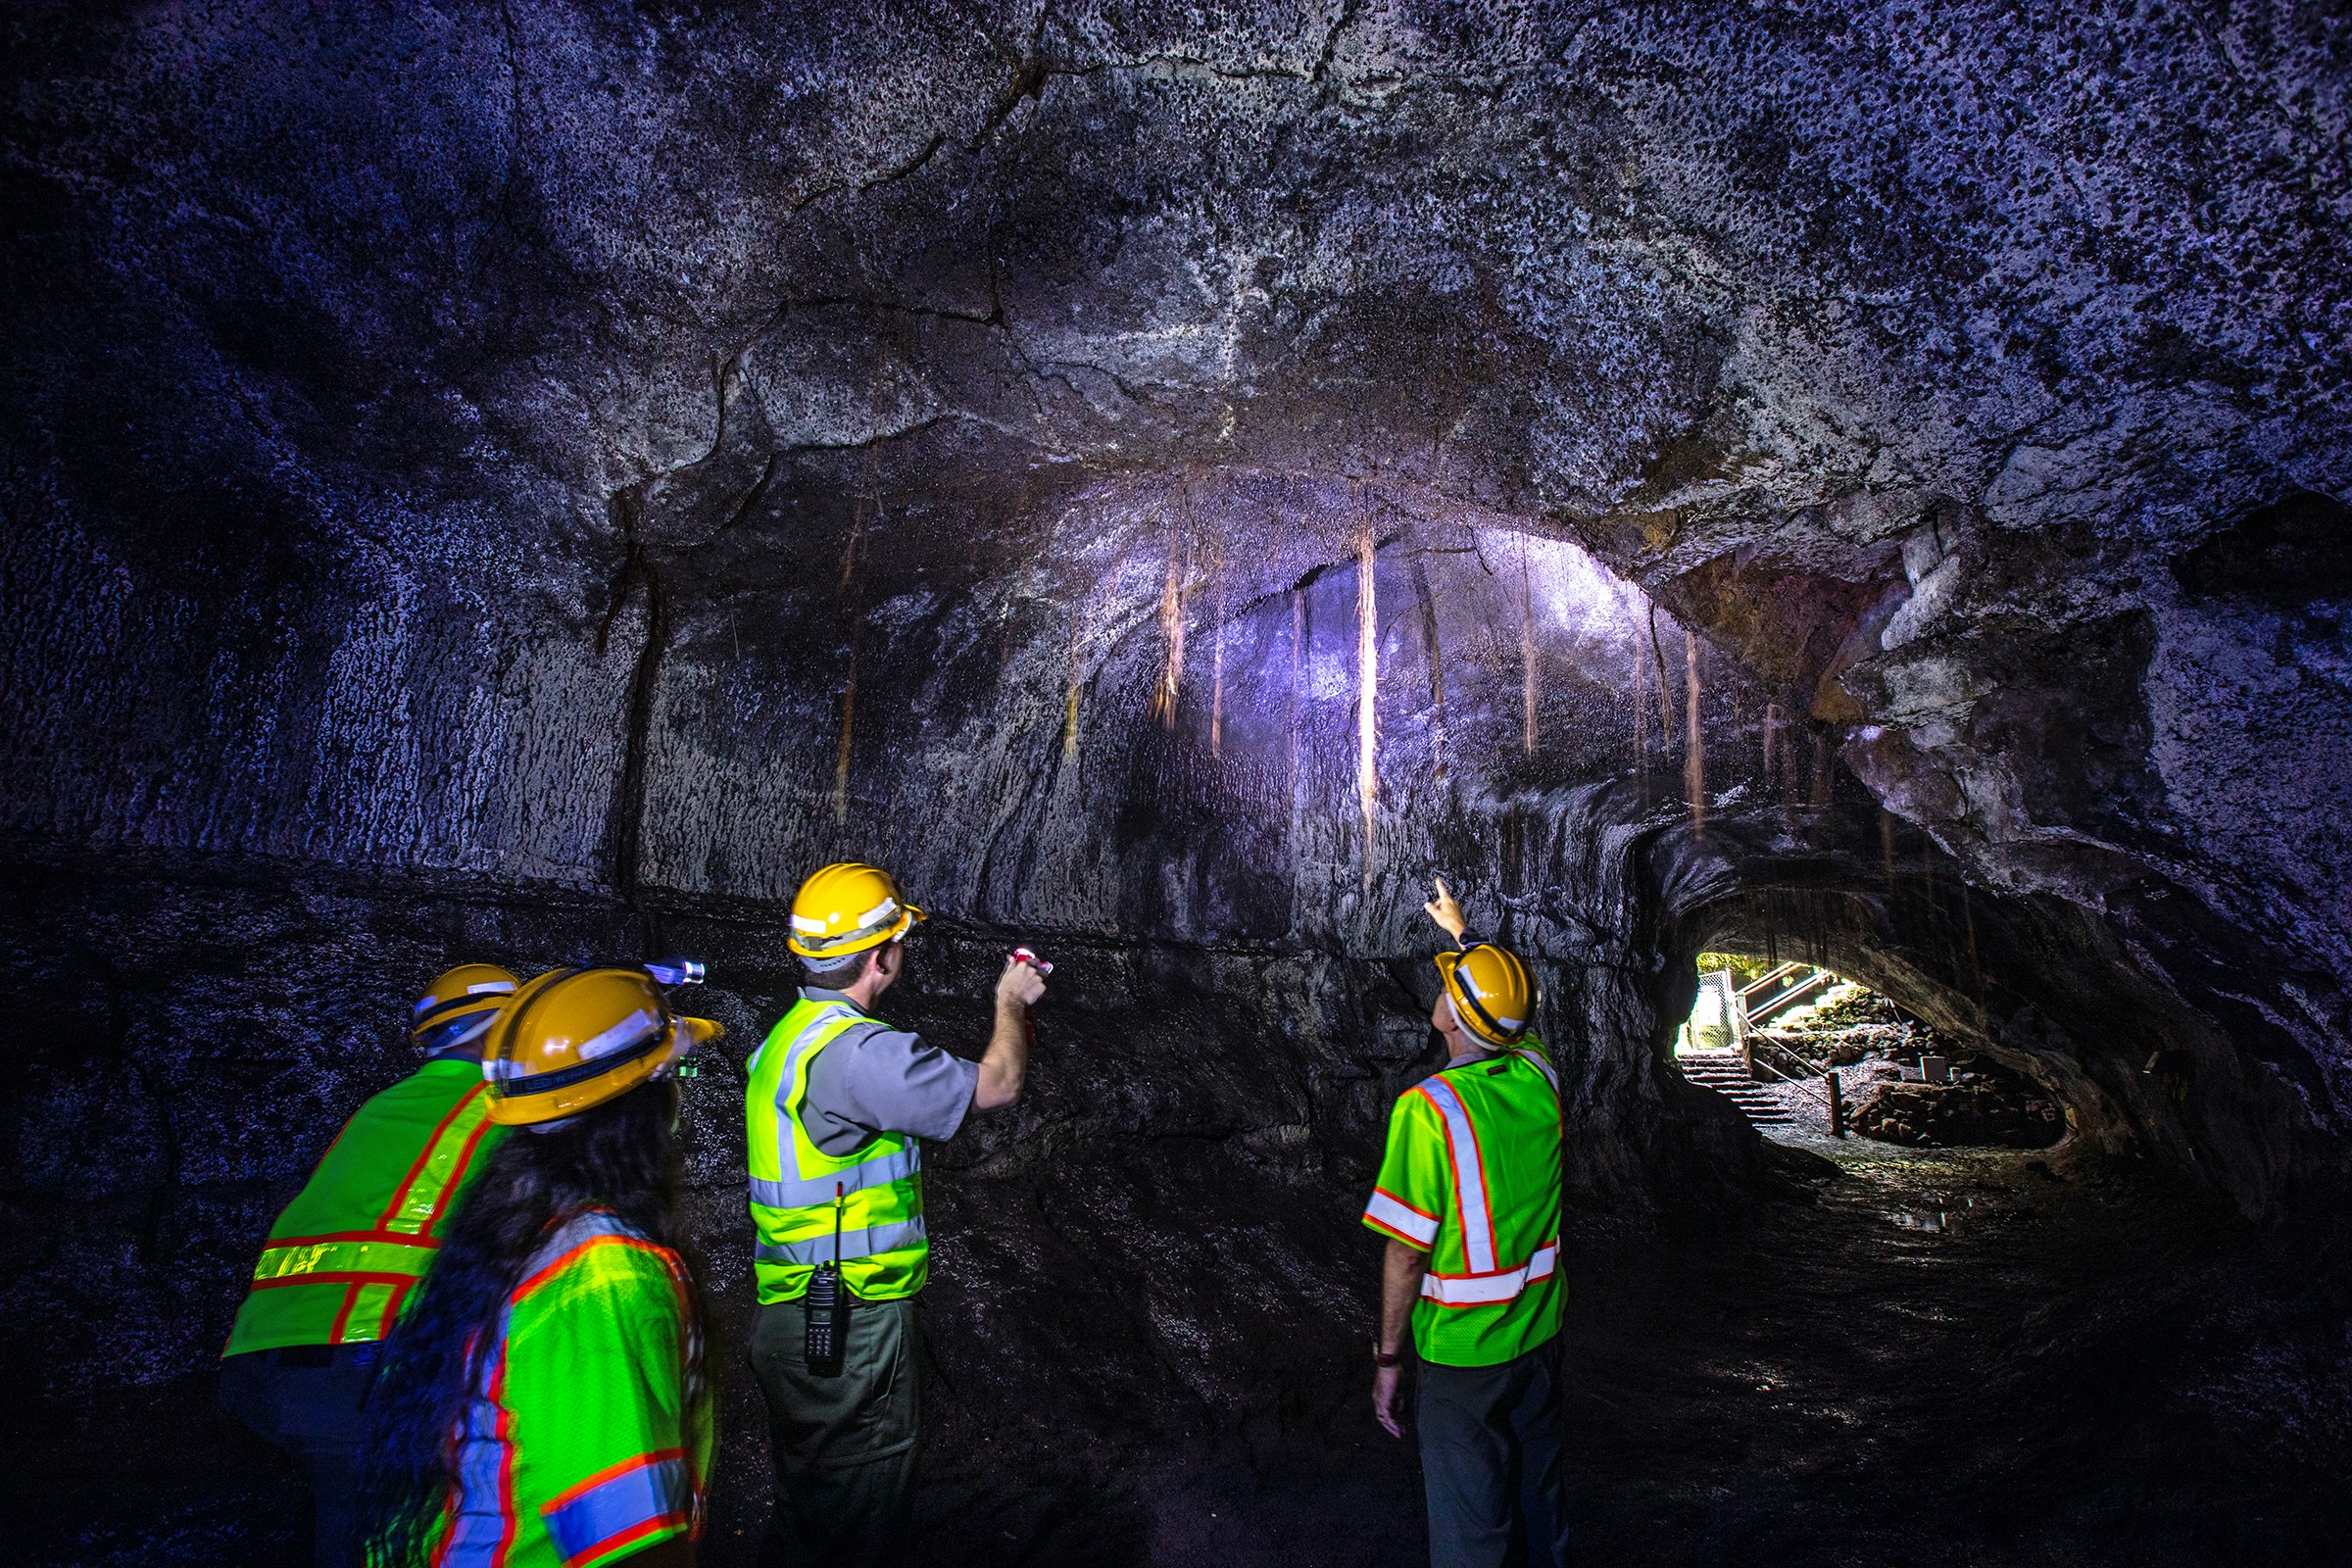 Rangers examine ohia tree roots, with the cave roof illuminated